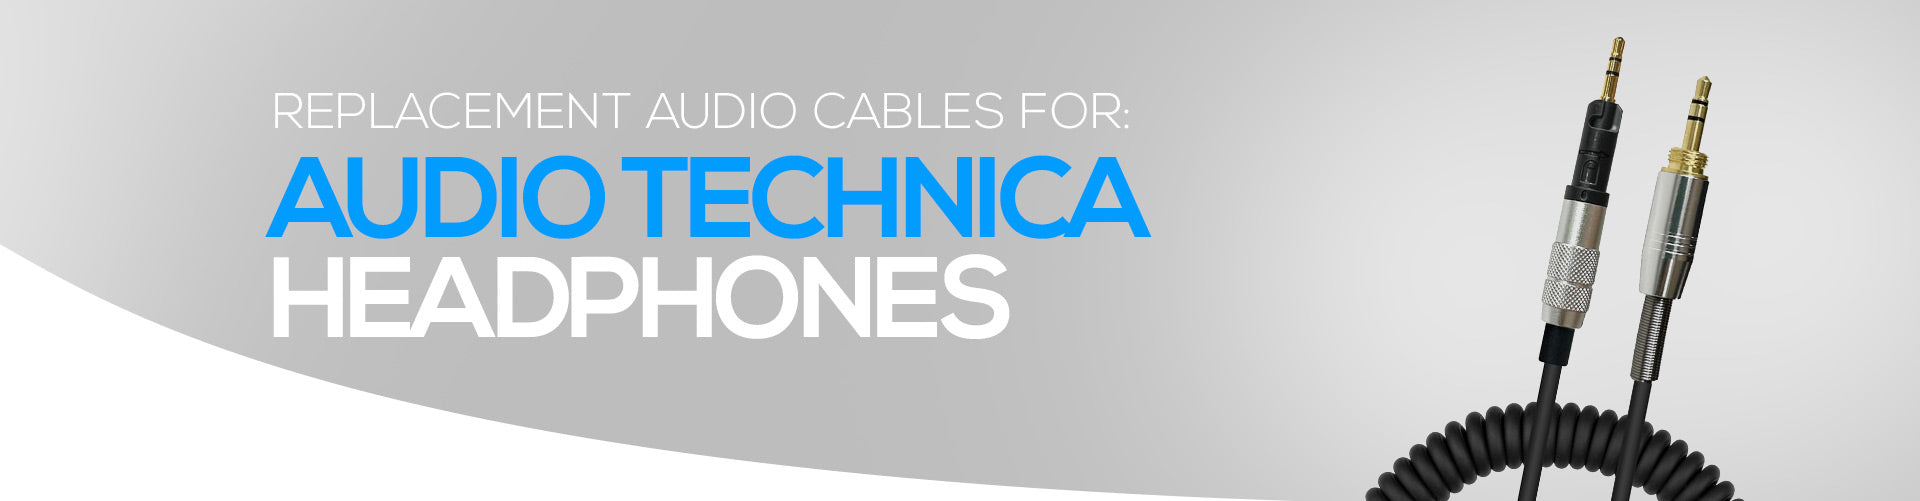 Audio cables For Audio Technica Headphones